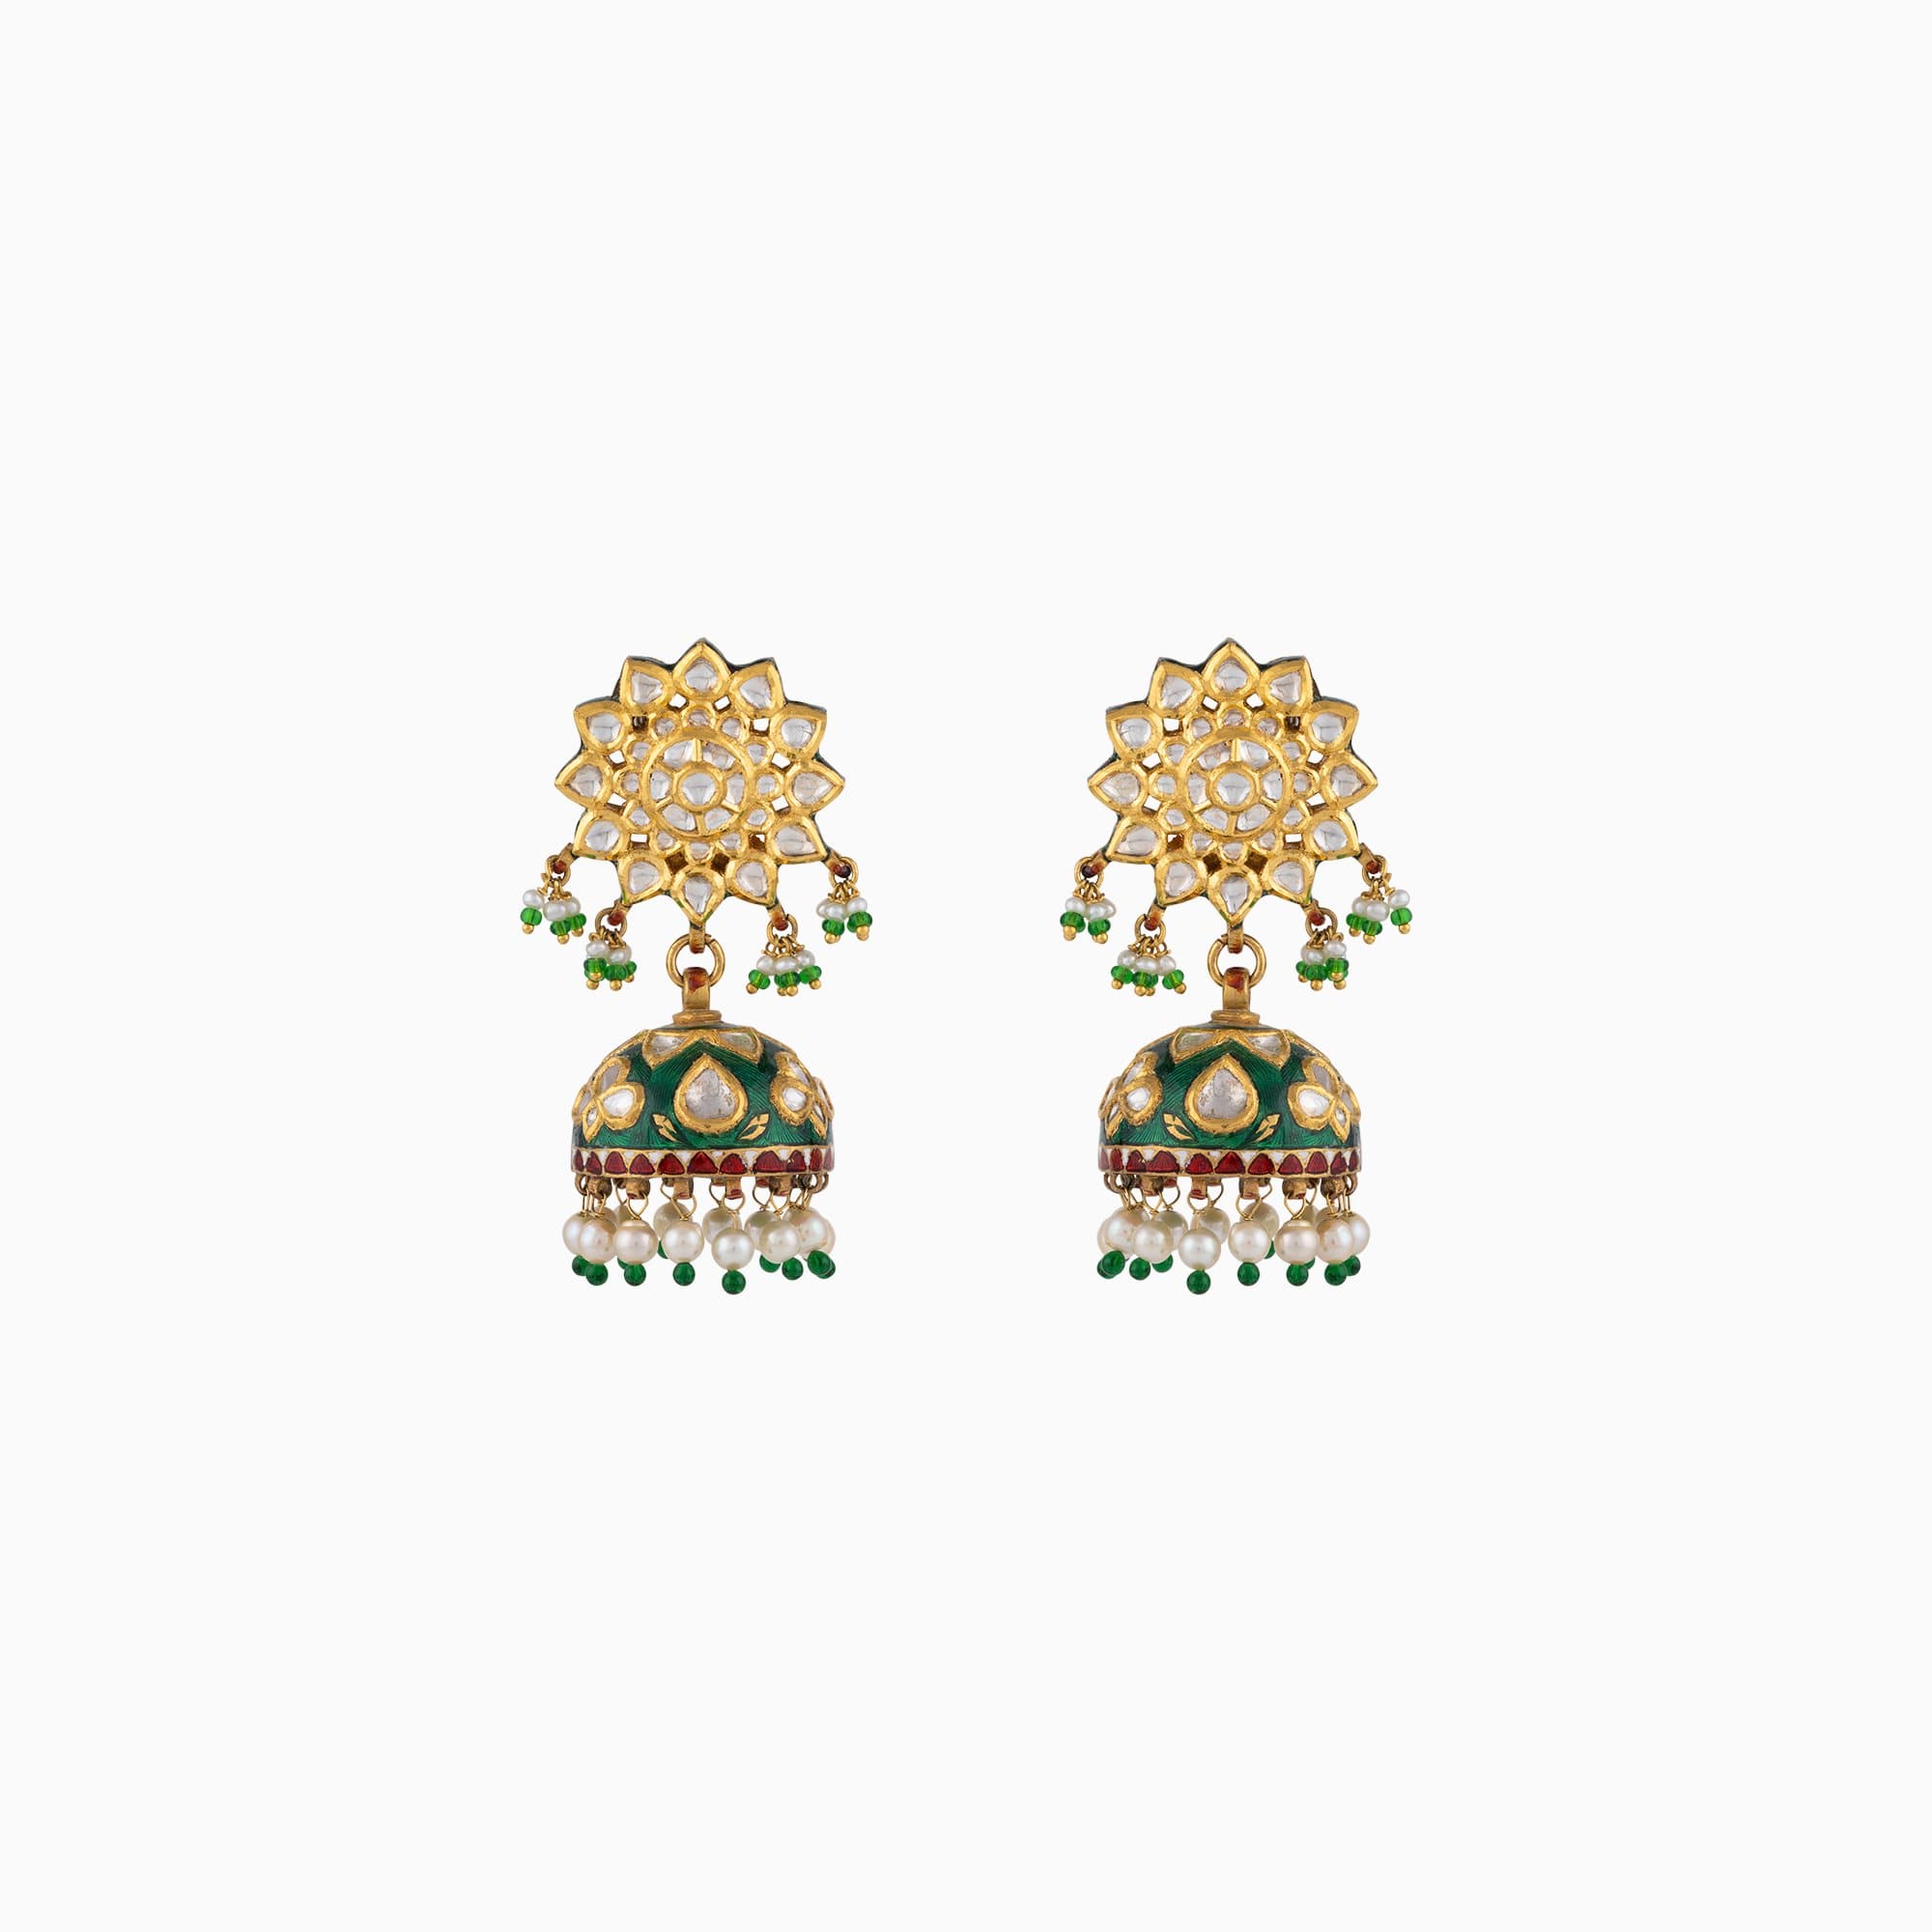 Jhoomki Pair with Green Meena, Uncut Diamond, Green Cheed and Pearls-KME1883